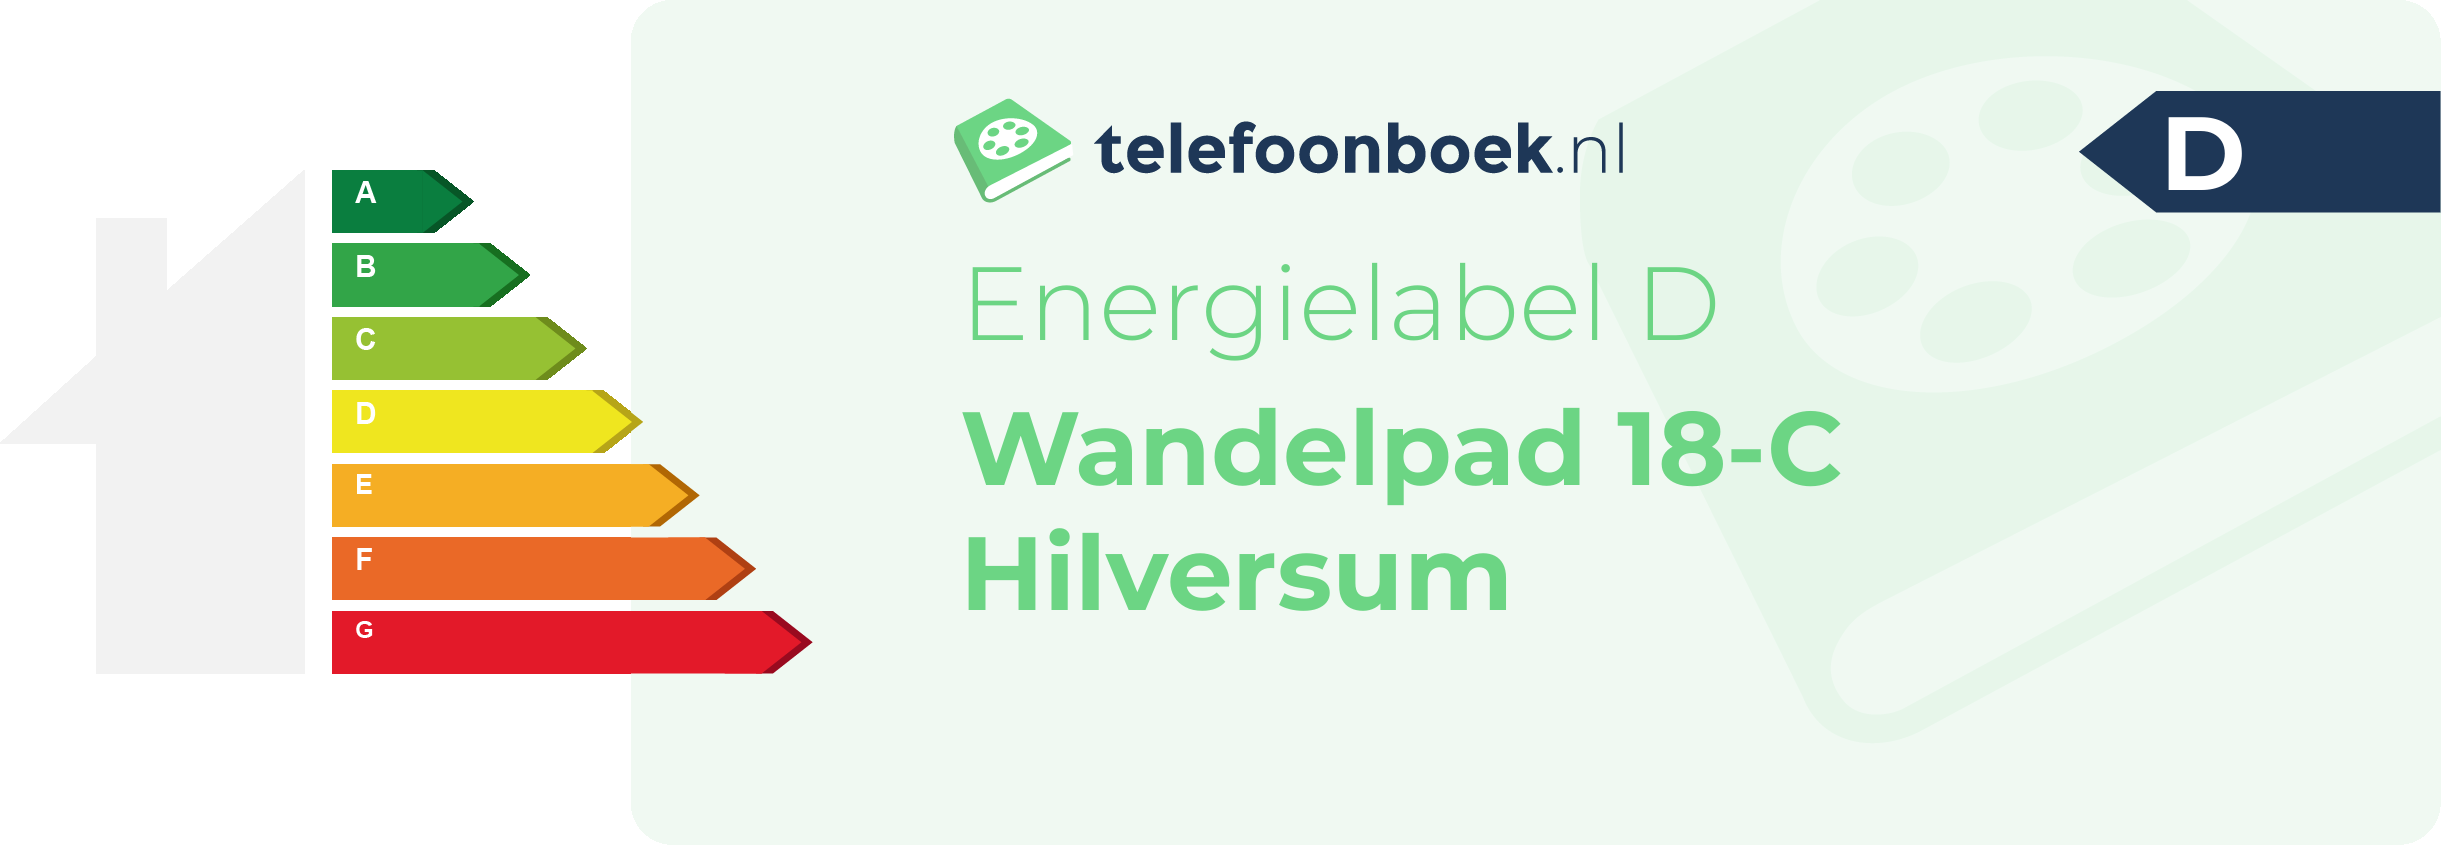 Energielabel Wandelpad 18-C Hilversum